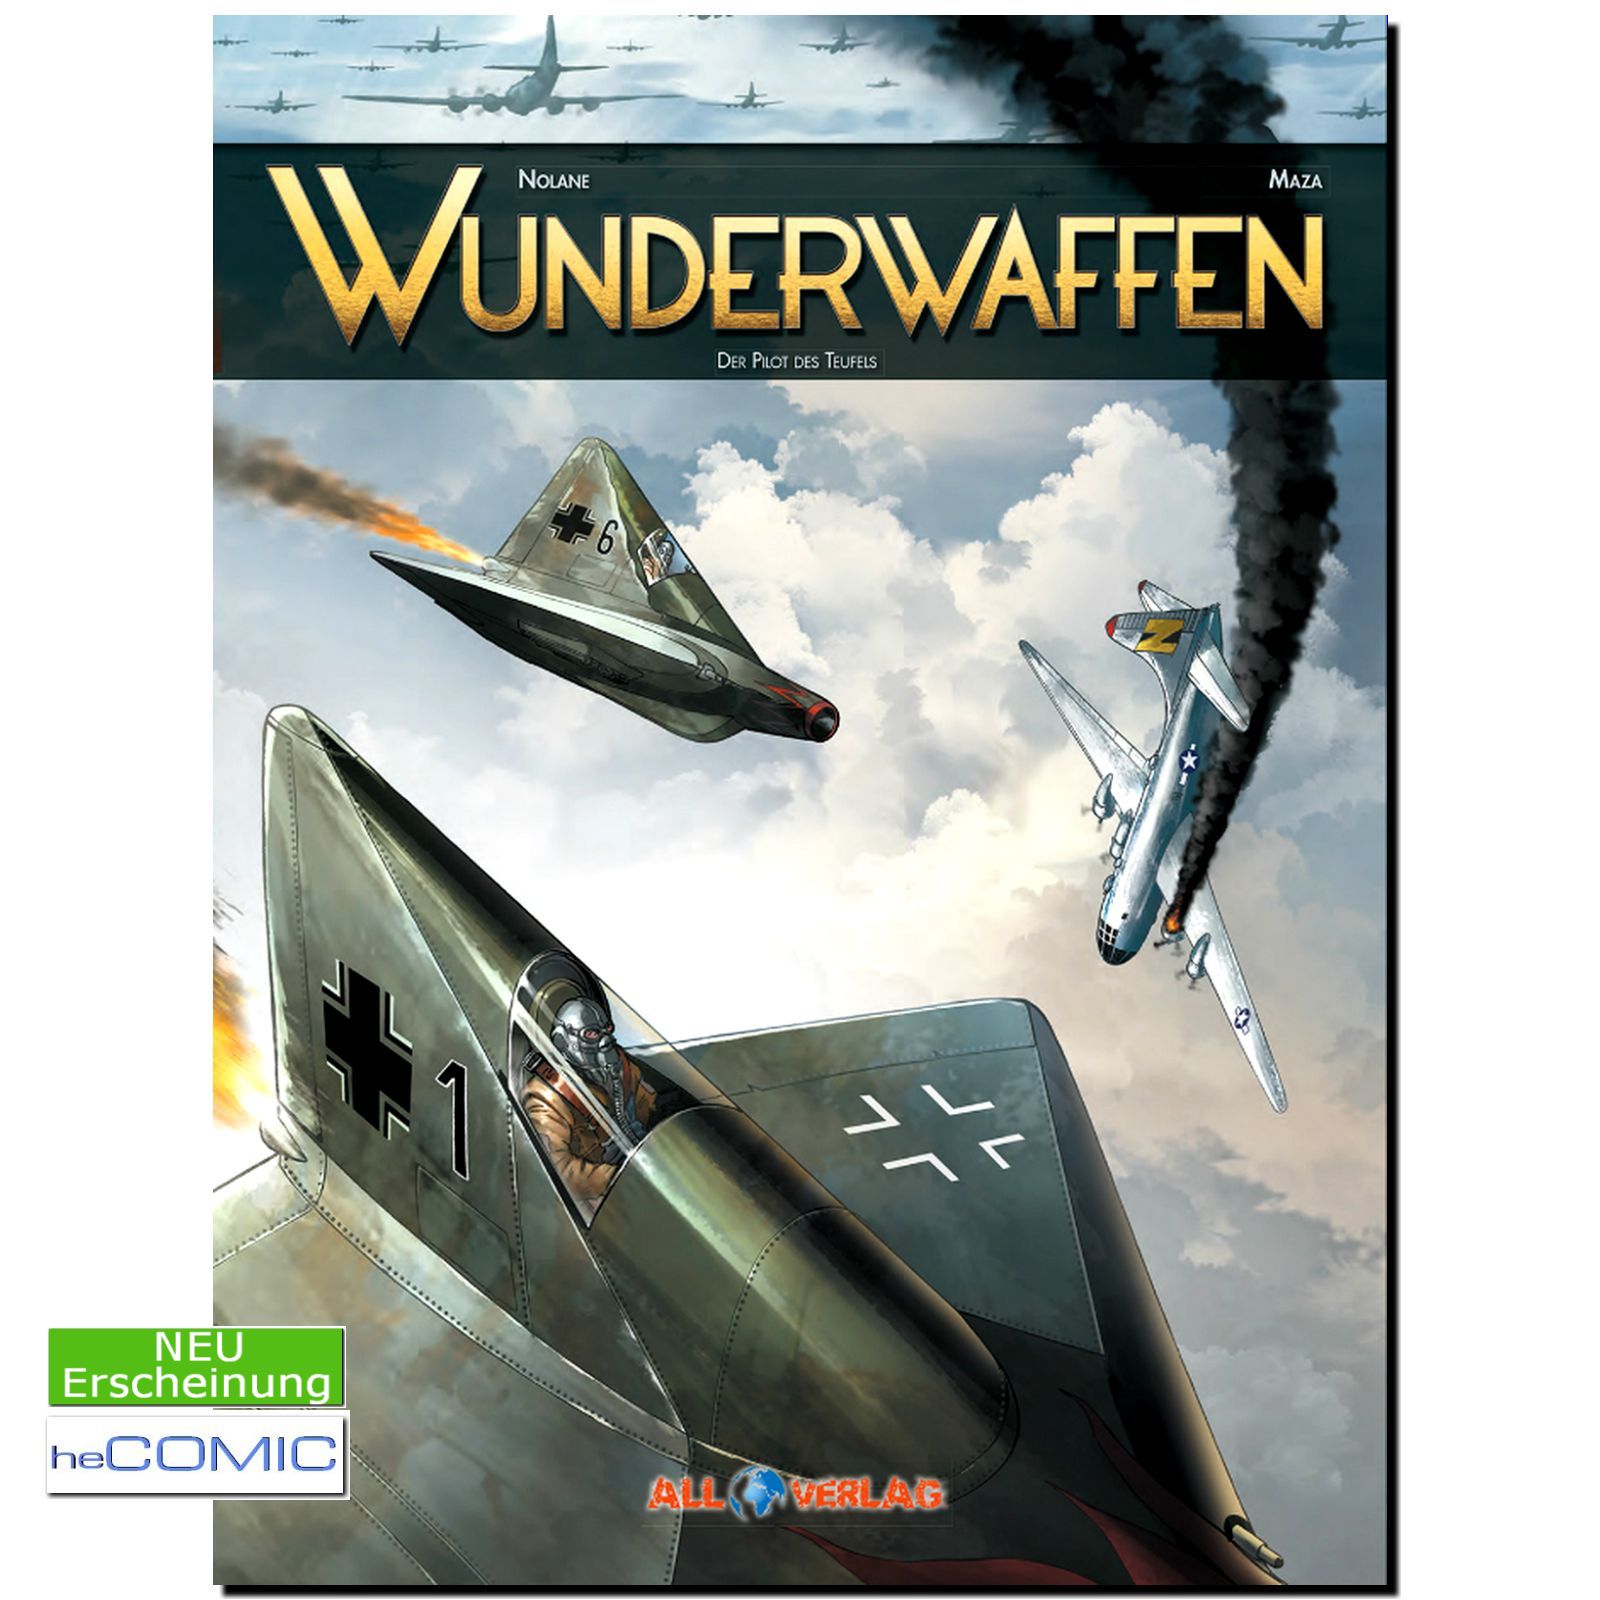 hecomic-Fliegerstaffel-Wunderwaffen-1-Der-Pilot-des-Teufels-978392697032-History.jpg